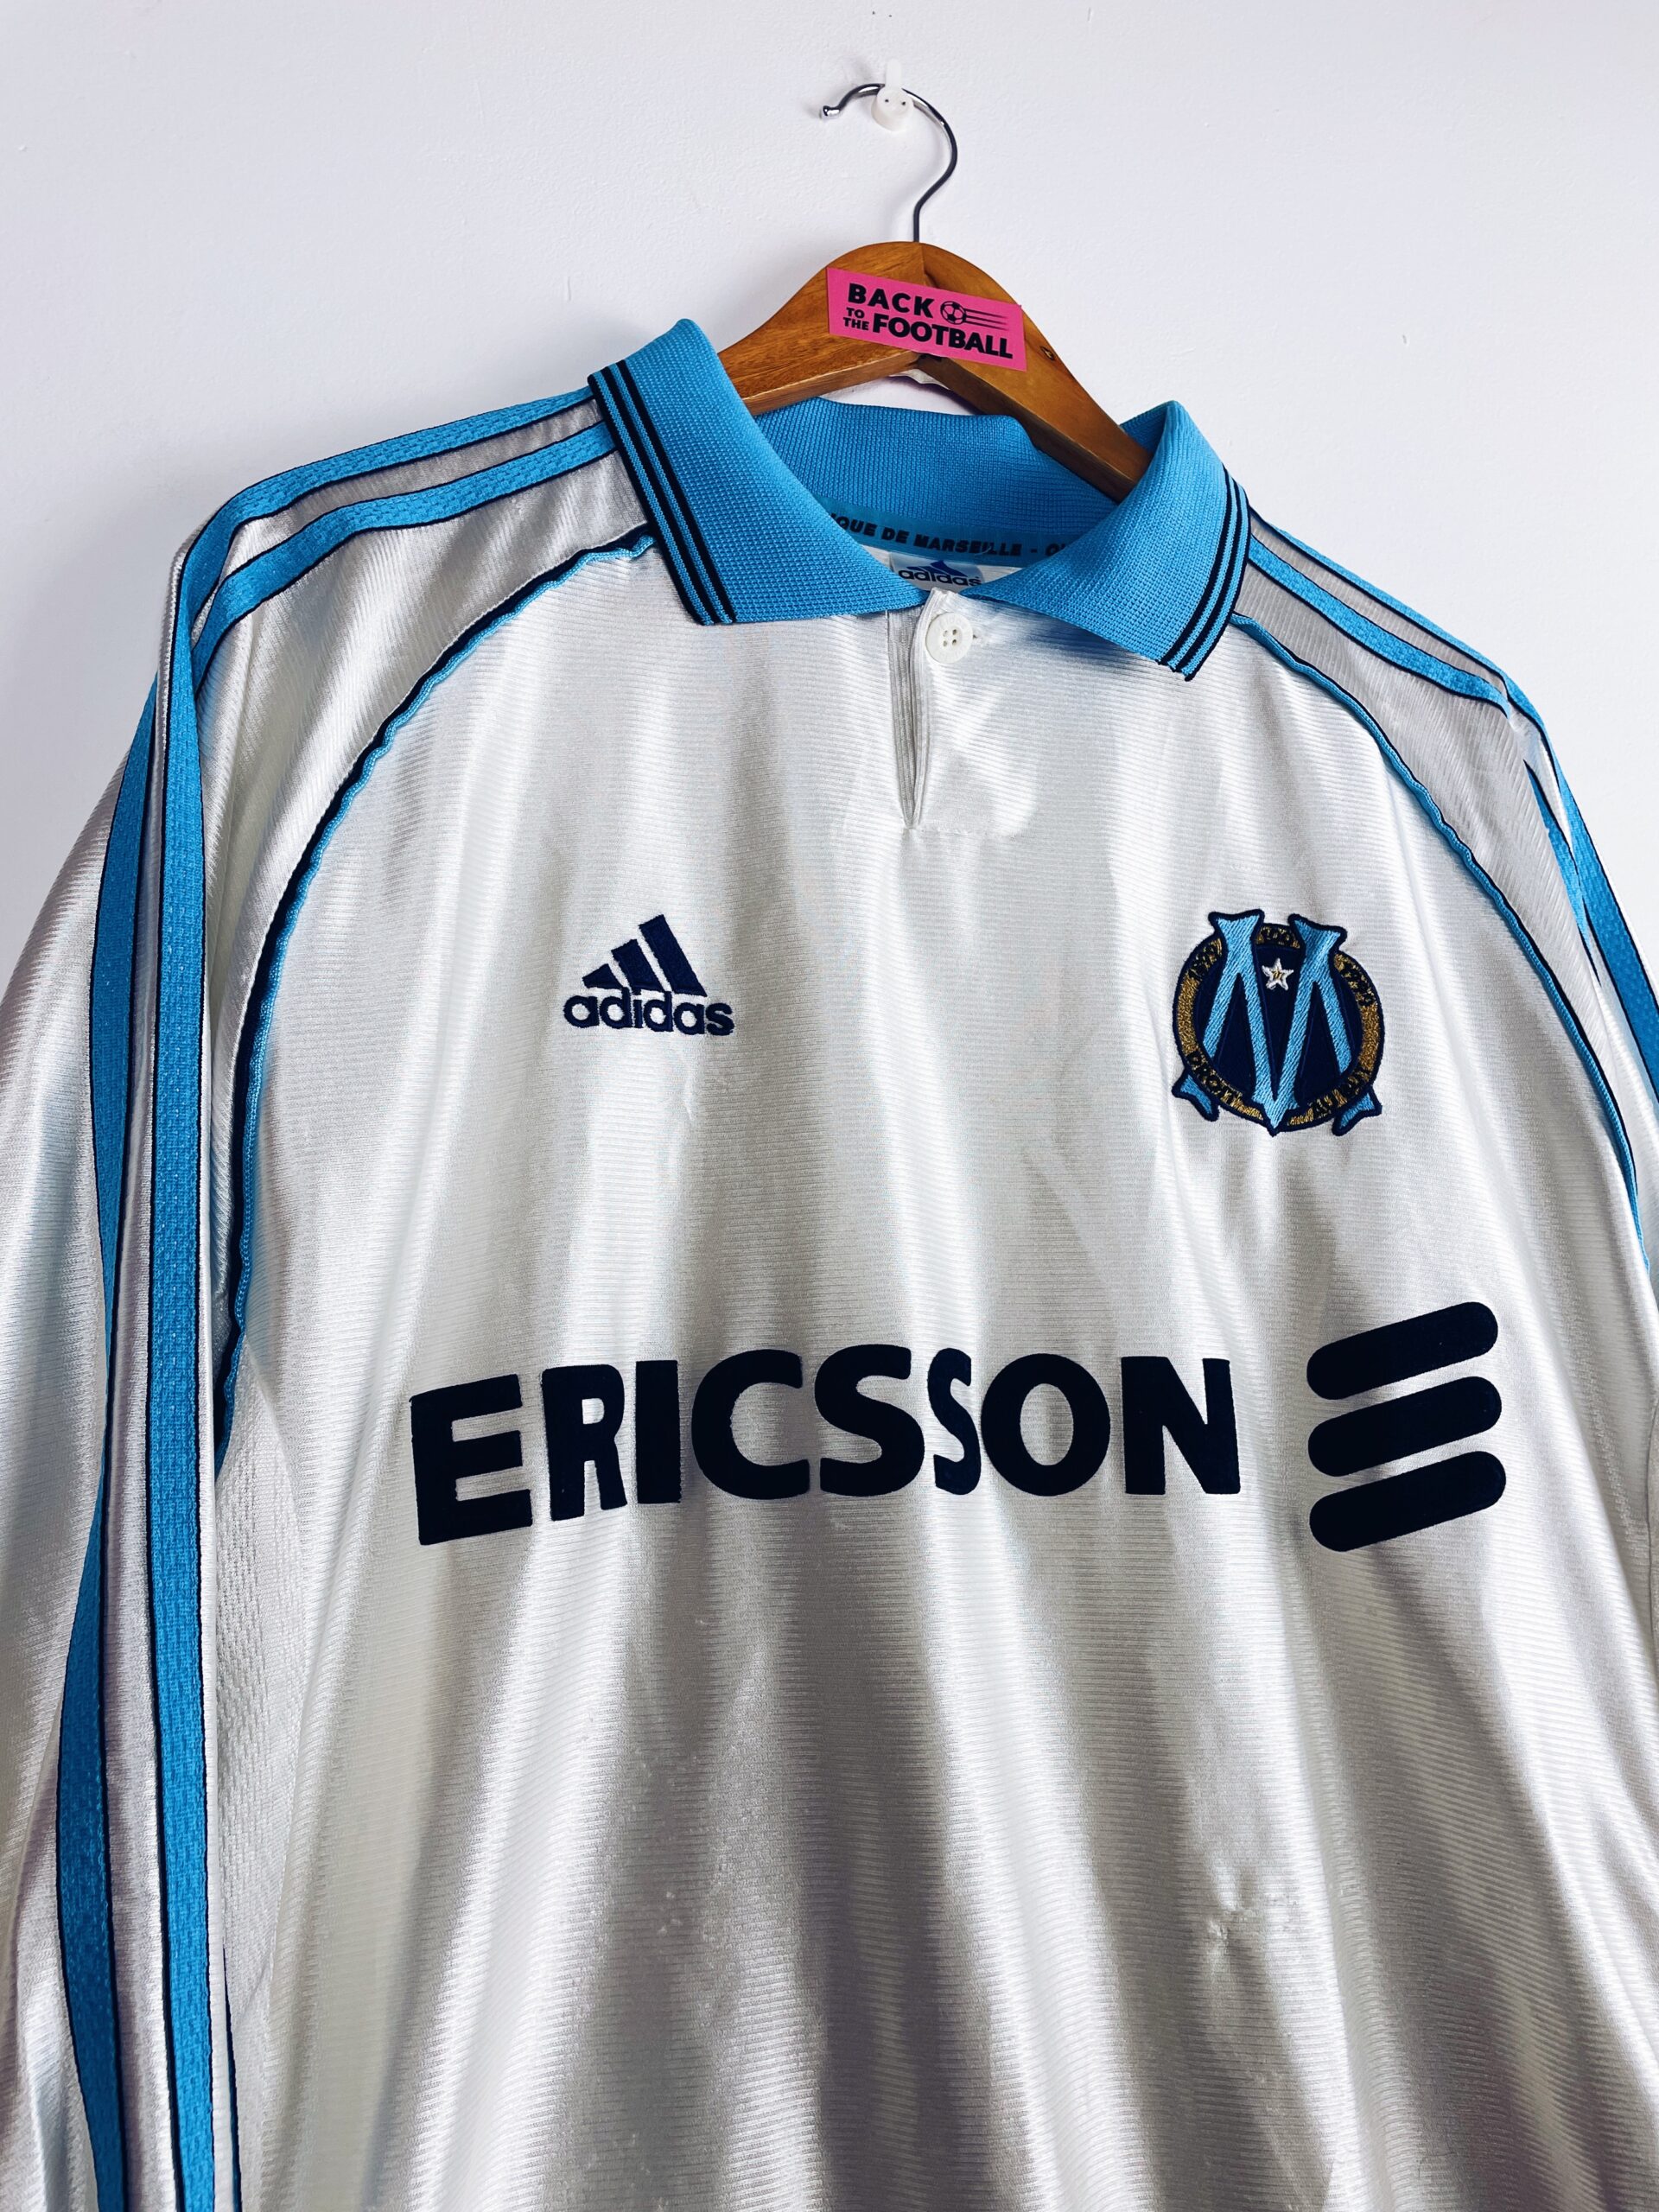 Maillot OM Ericsson 1999 Adidas Vintage Enfant Olympique Marseille - XXS